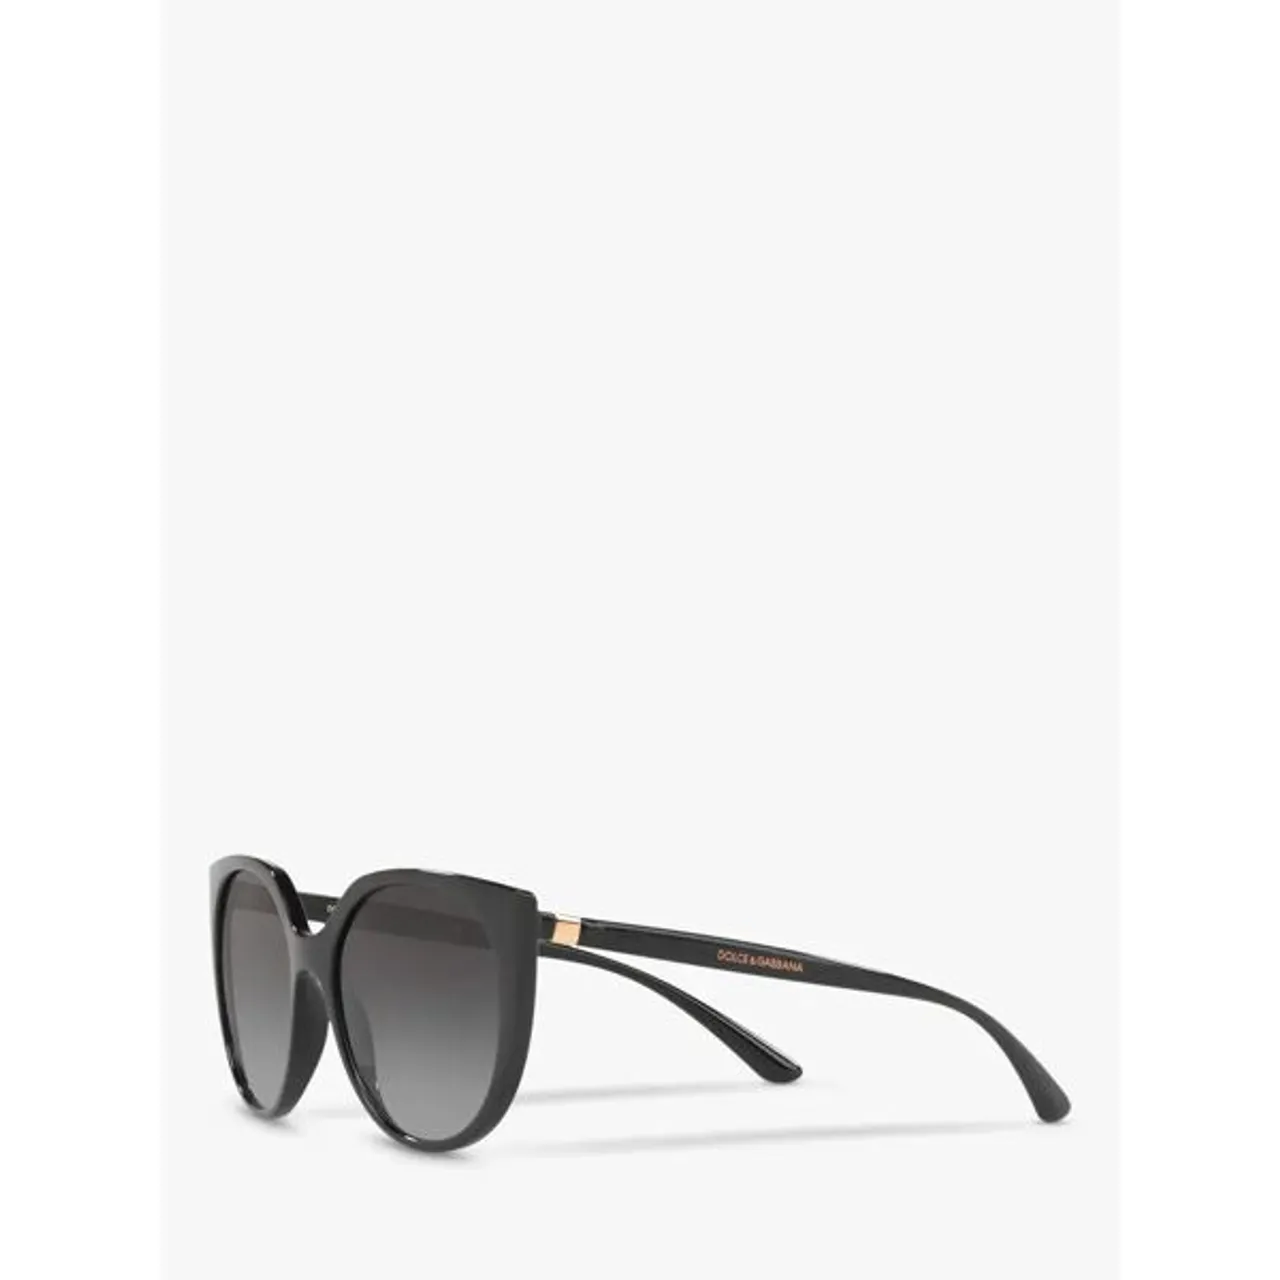 Dolce & Gabbana DG6119 Women's Oval Sunglasses, Matte Black/Grey Gradient - Matte Black/Grey Gradient - Female